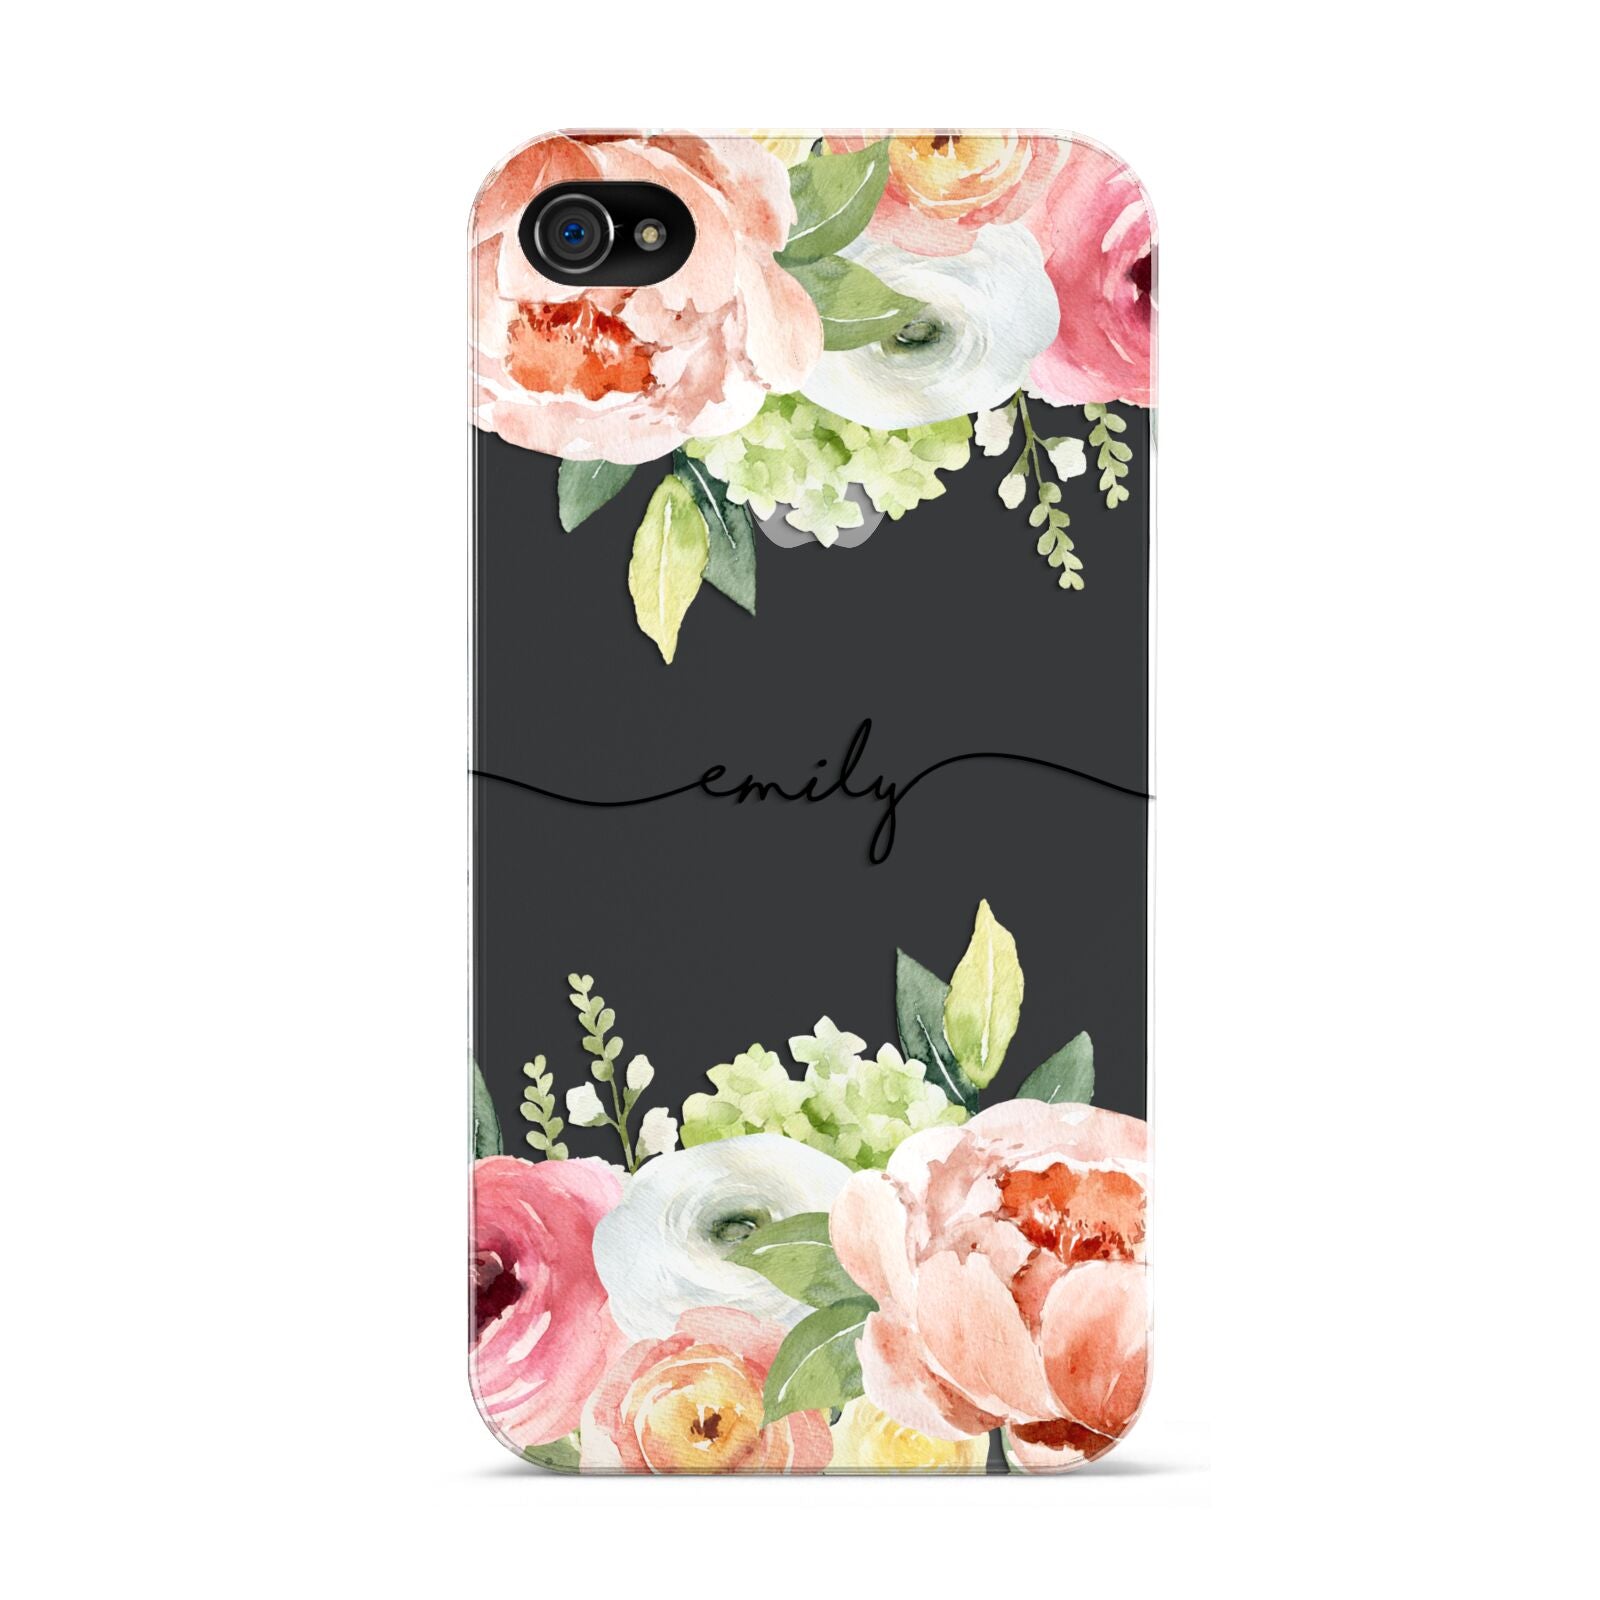 Personalised Flowers Apple iPhone 4s Case